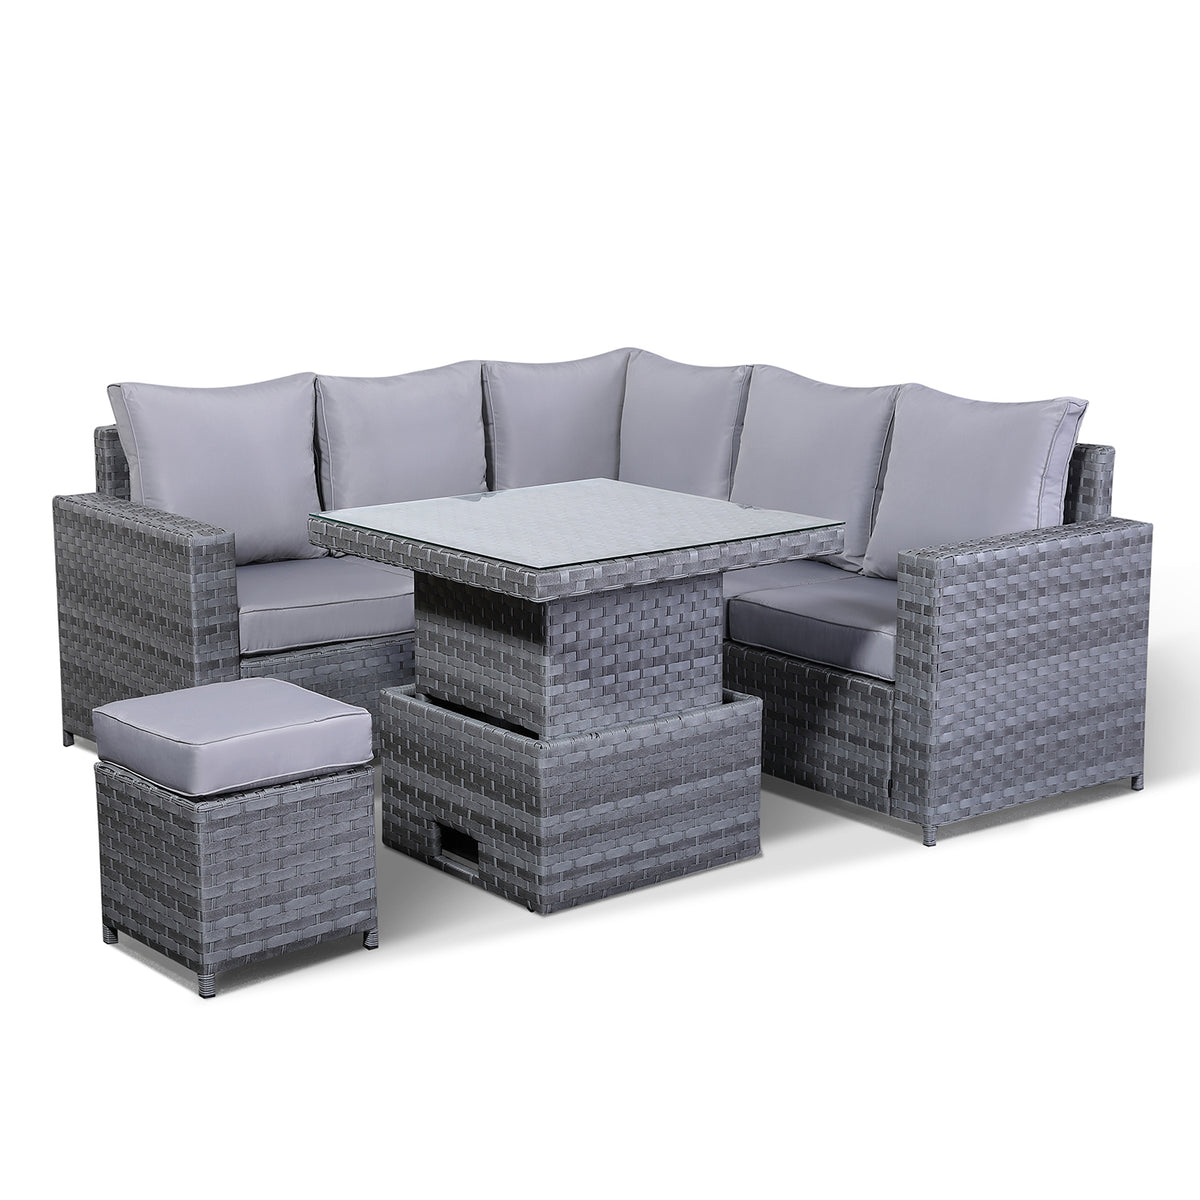 Aster Range High Back Small Dining Corner Sofa Set in Grey Weave